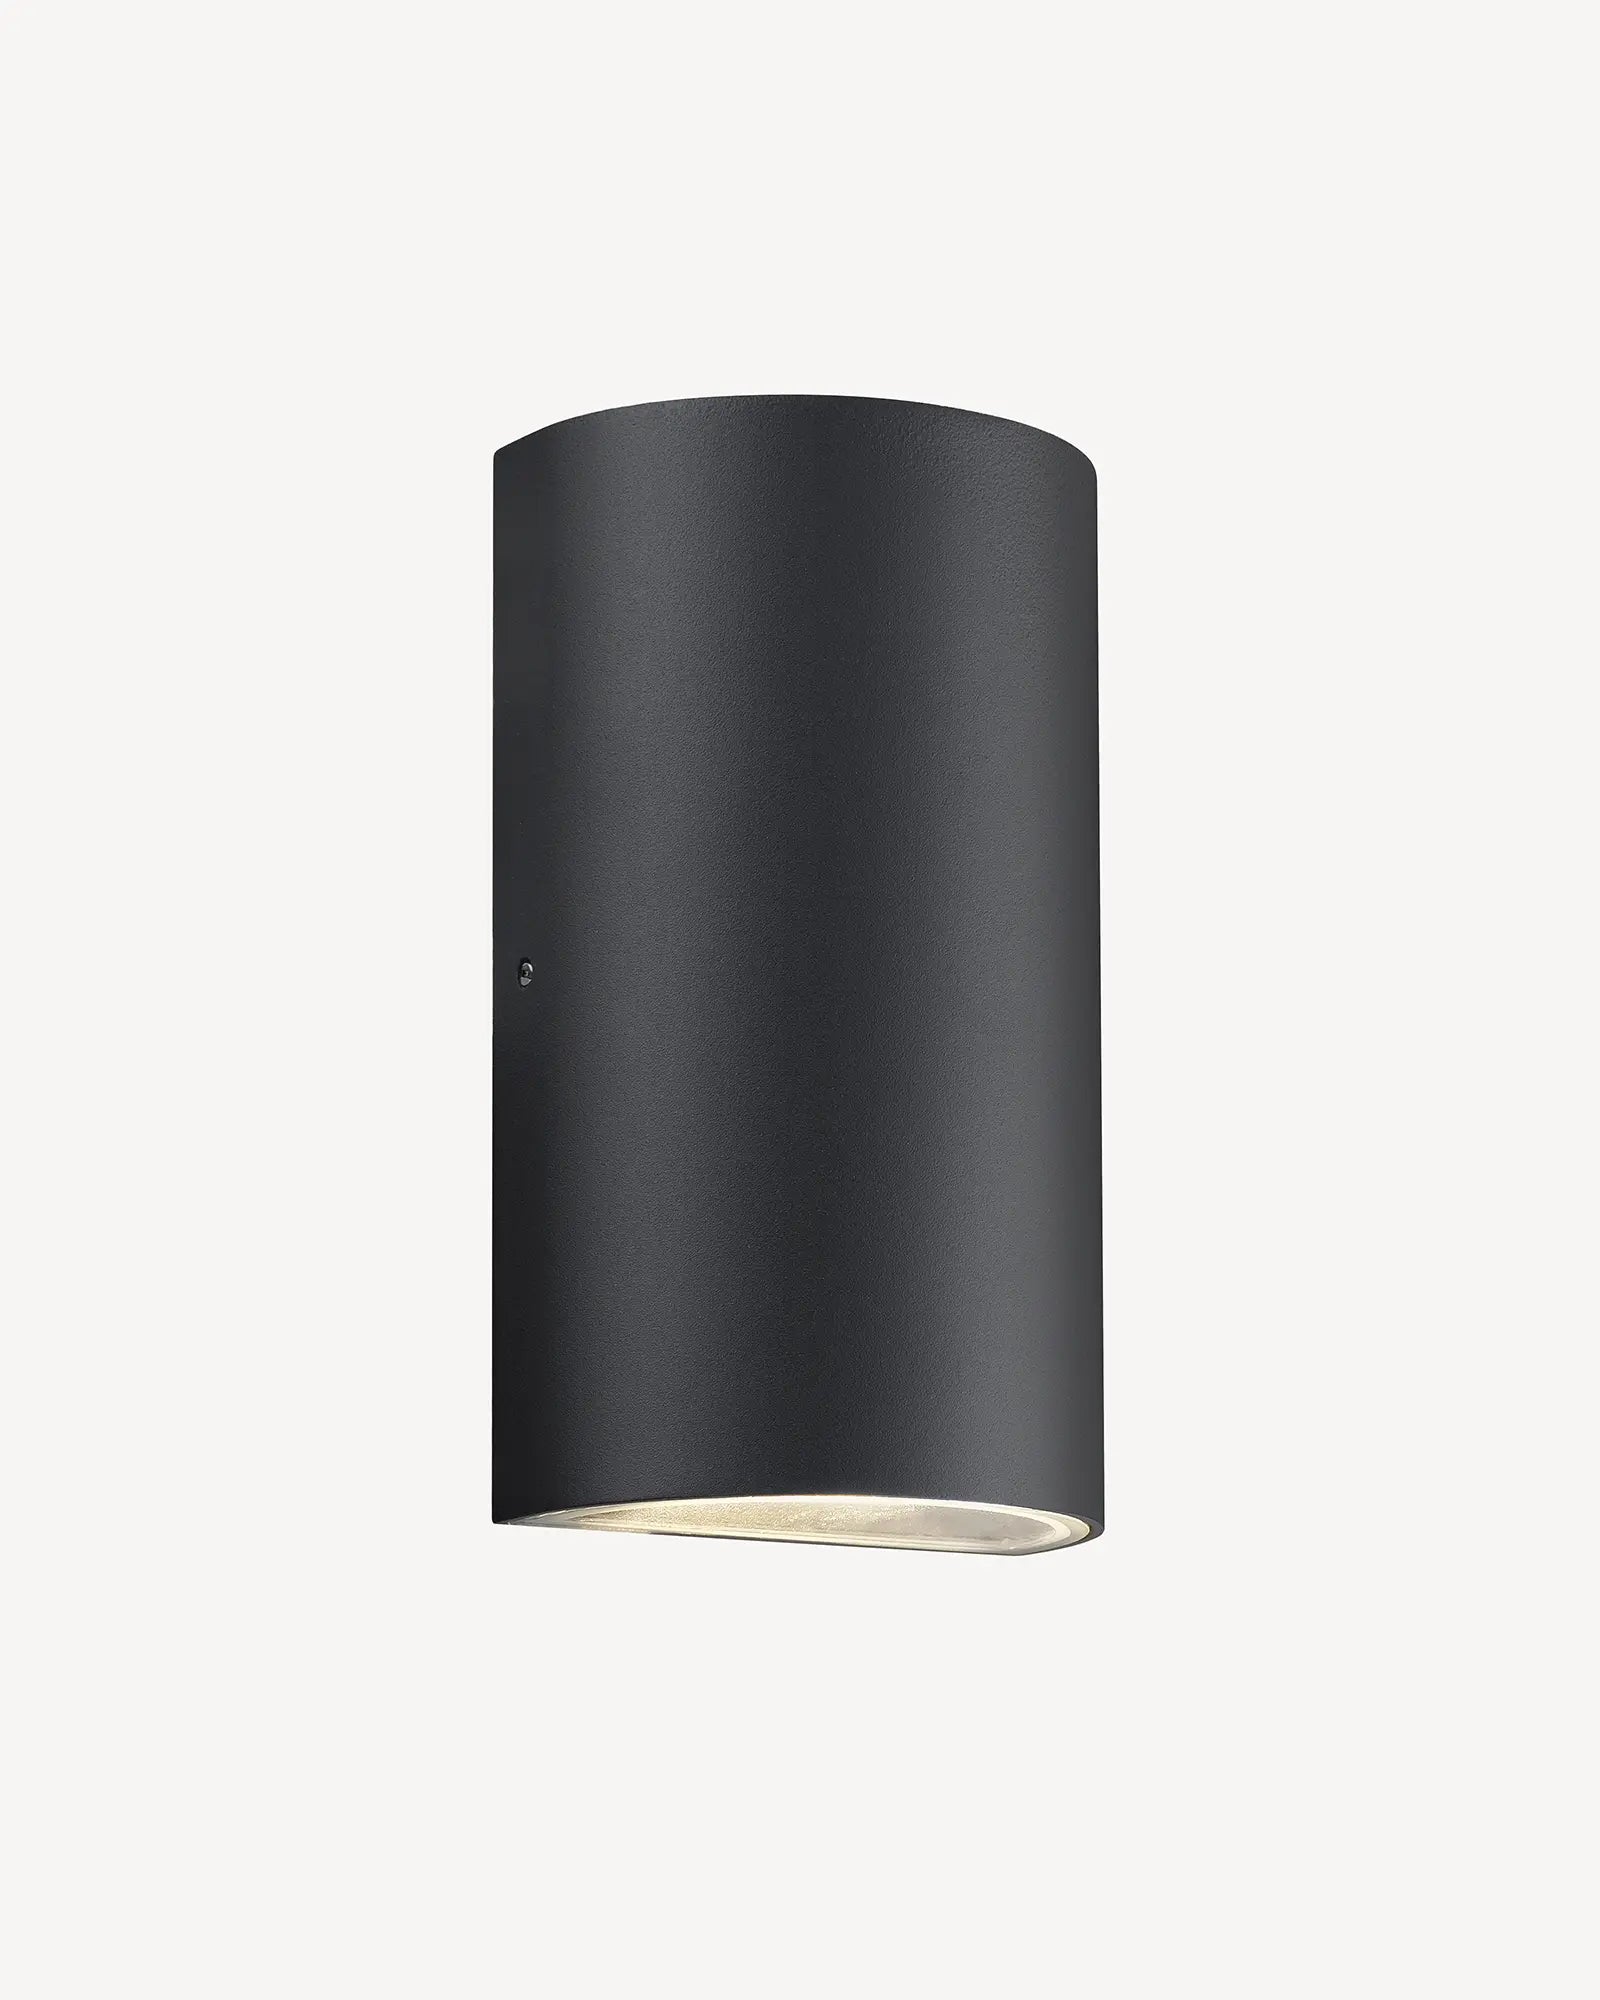 Rold minimal scandinavian half cylinder outdoor wall light in black 